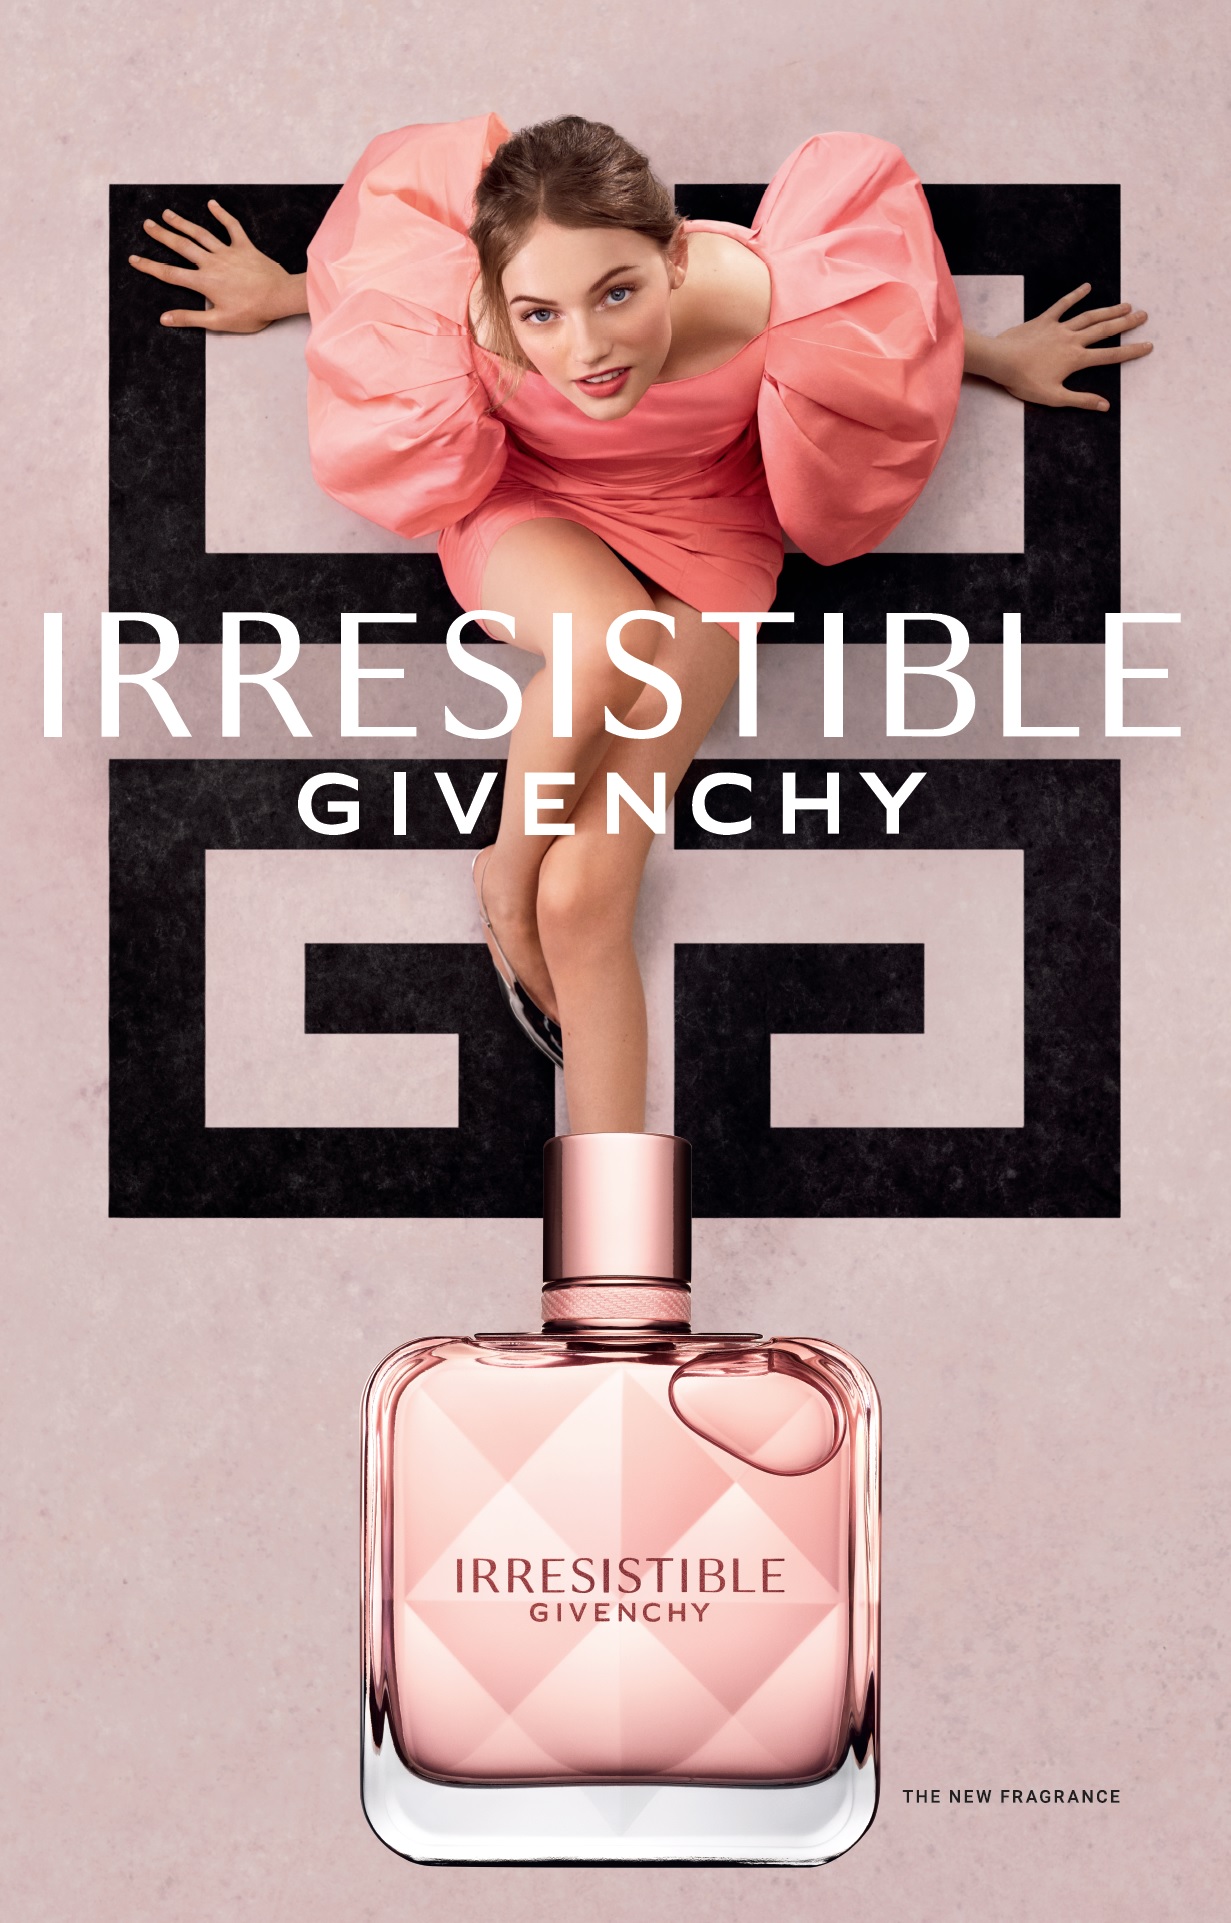 New Givenchy Fragrances: Irrésistible 